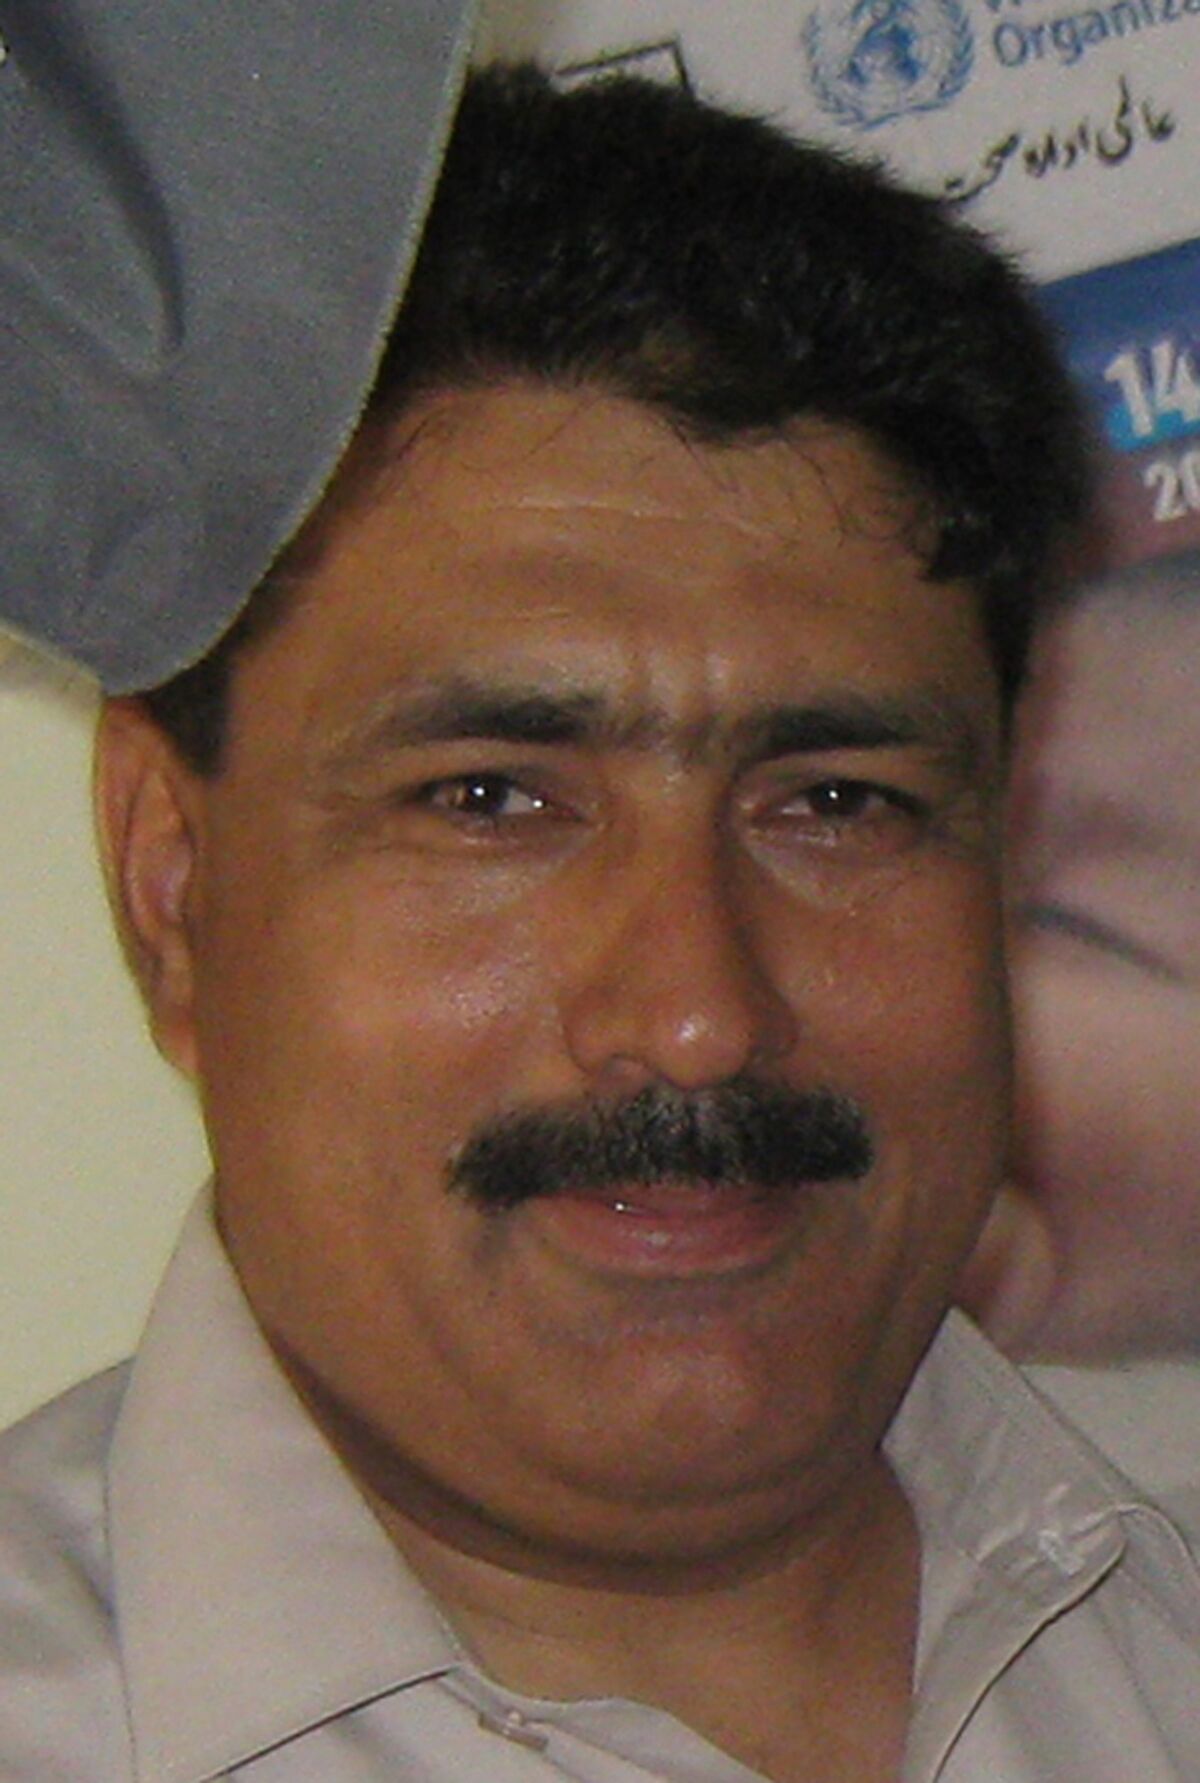 Dr. Shakil Afridi in 2010.